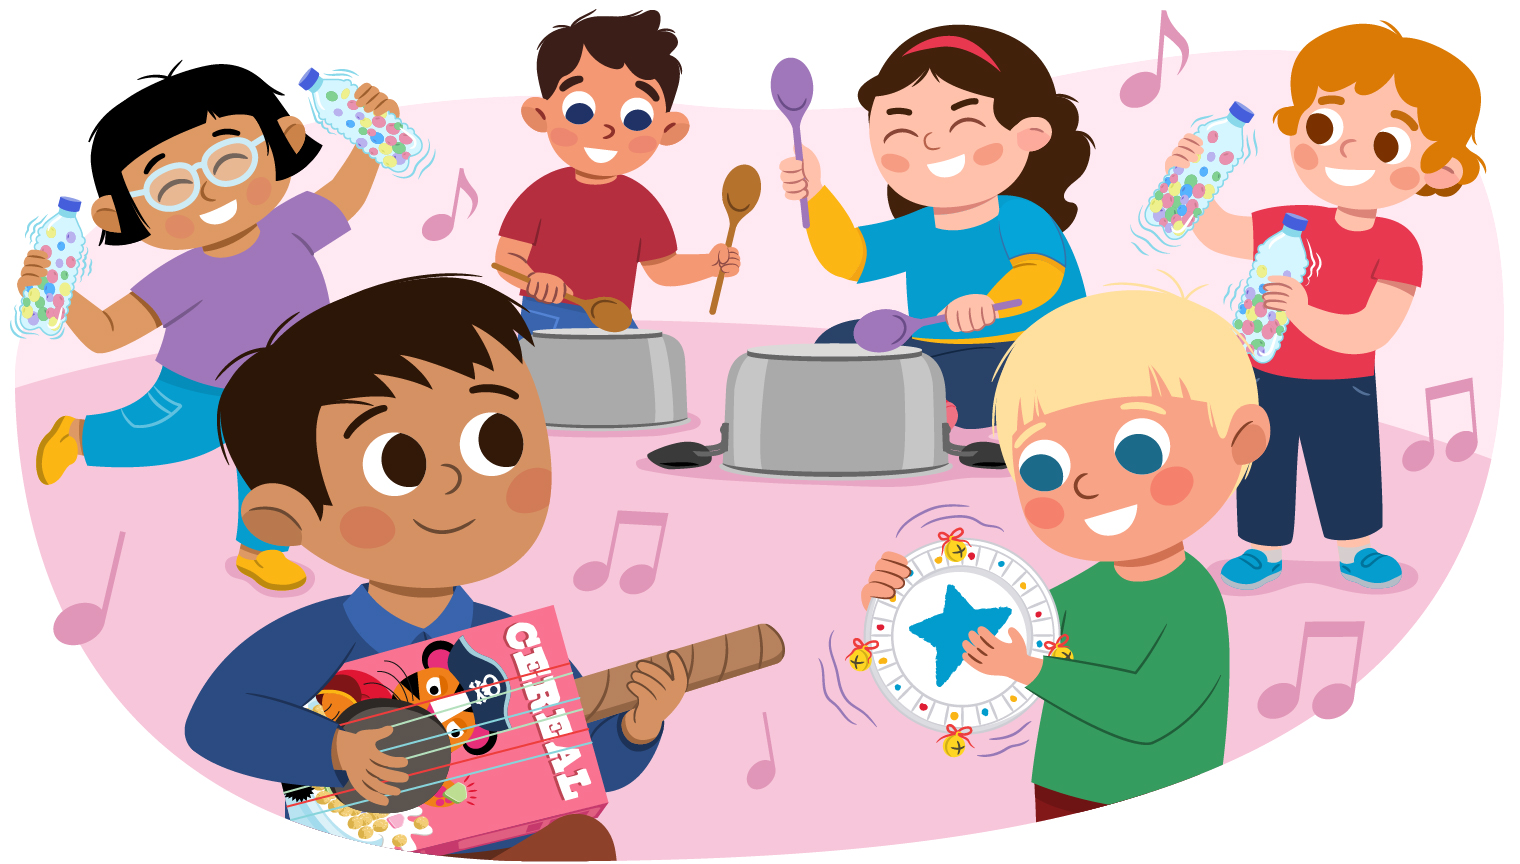 tvo illustration kindergarten stuents plaing homemade instruments